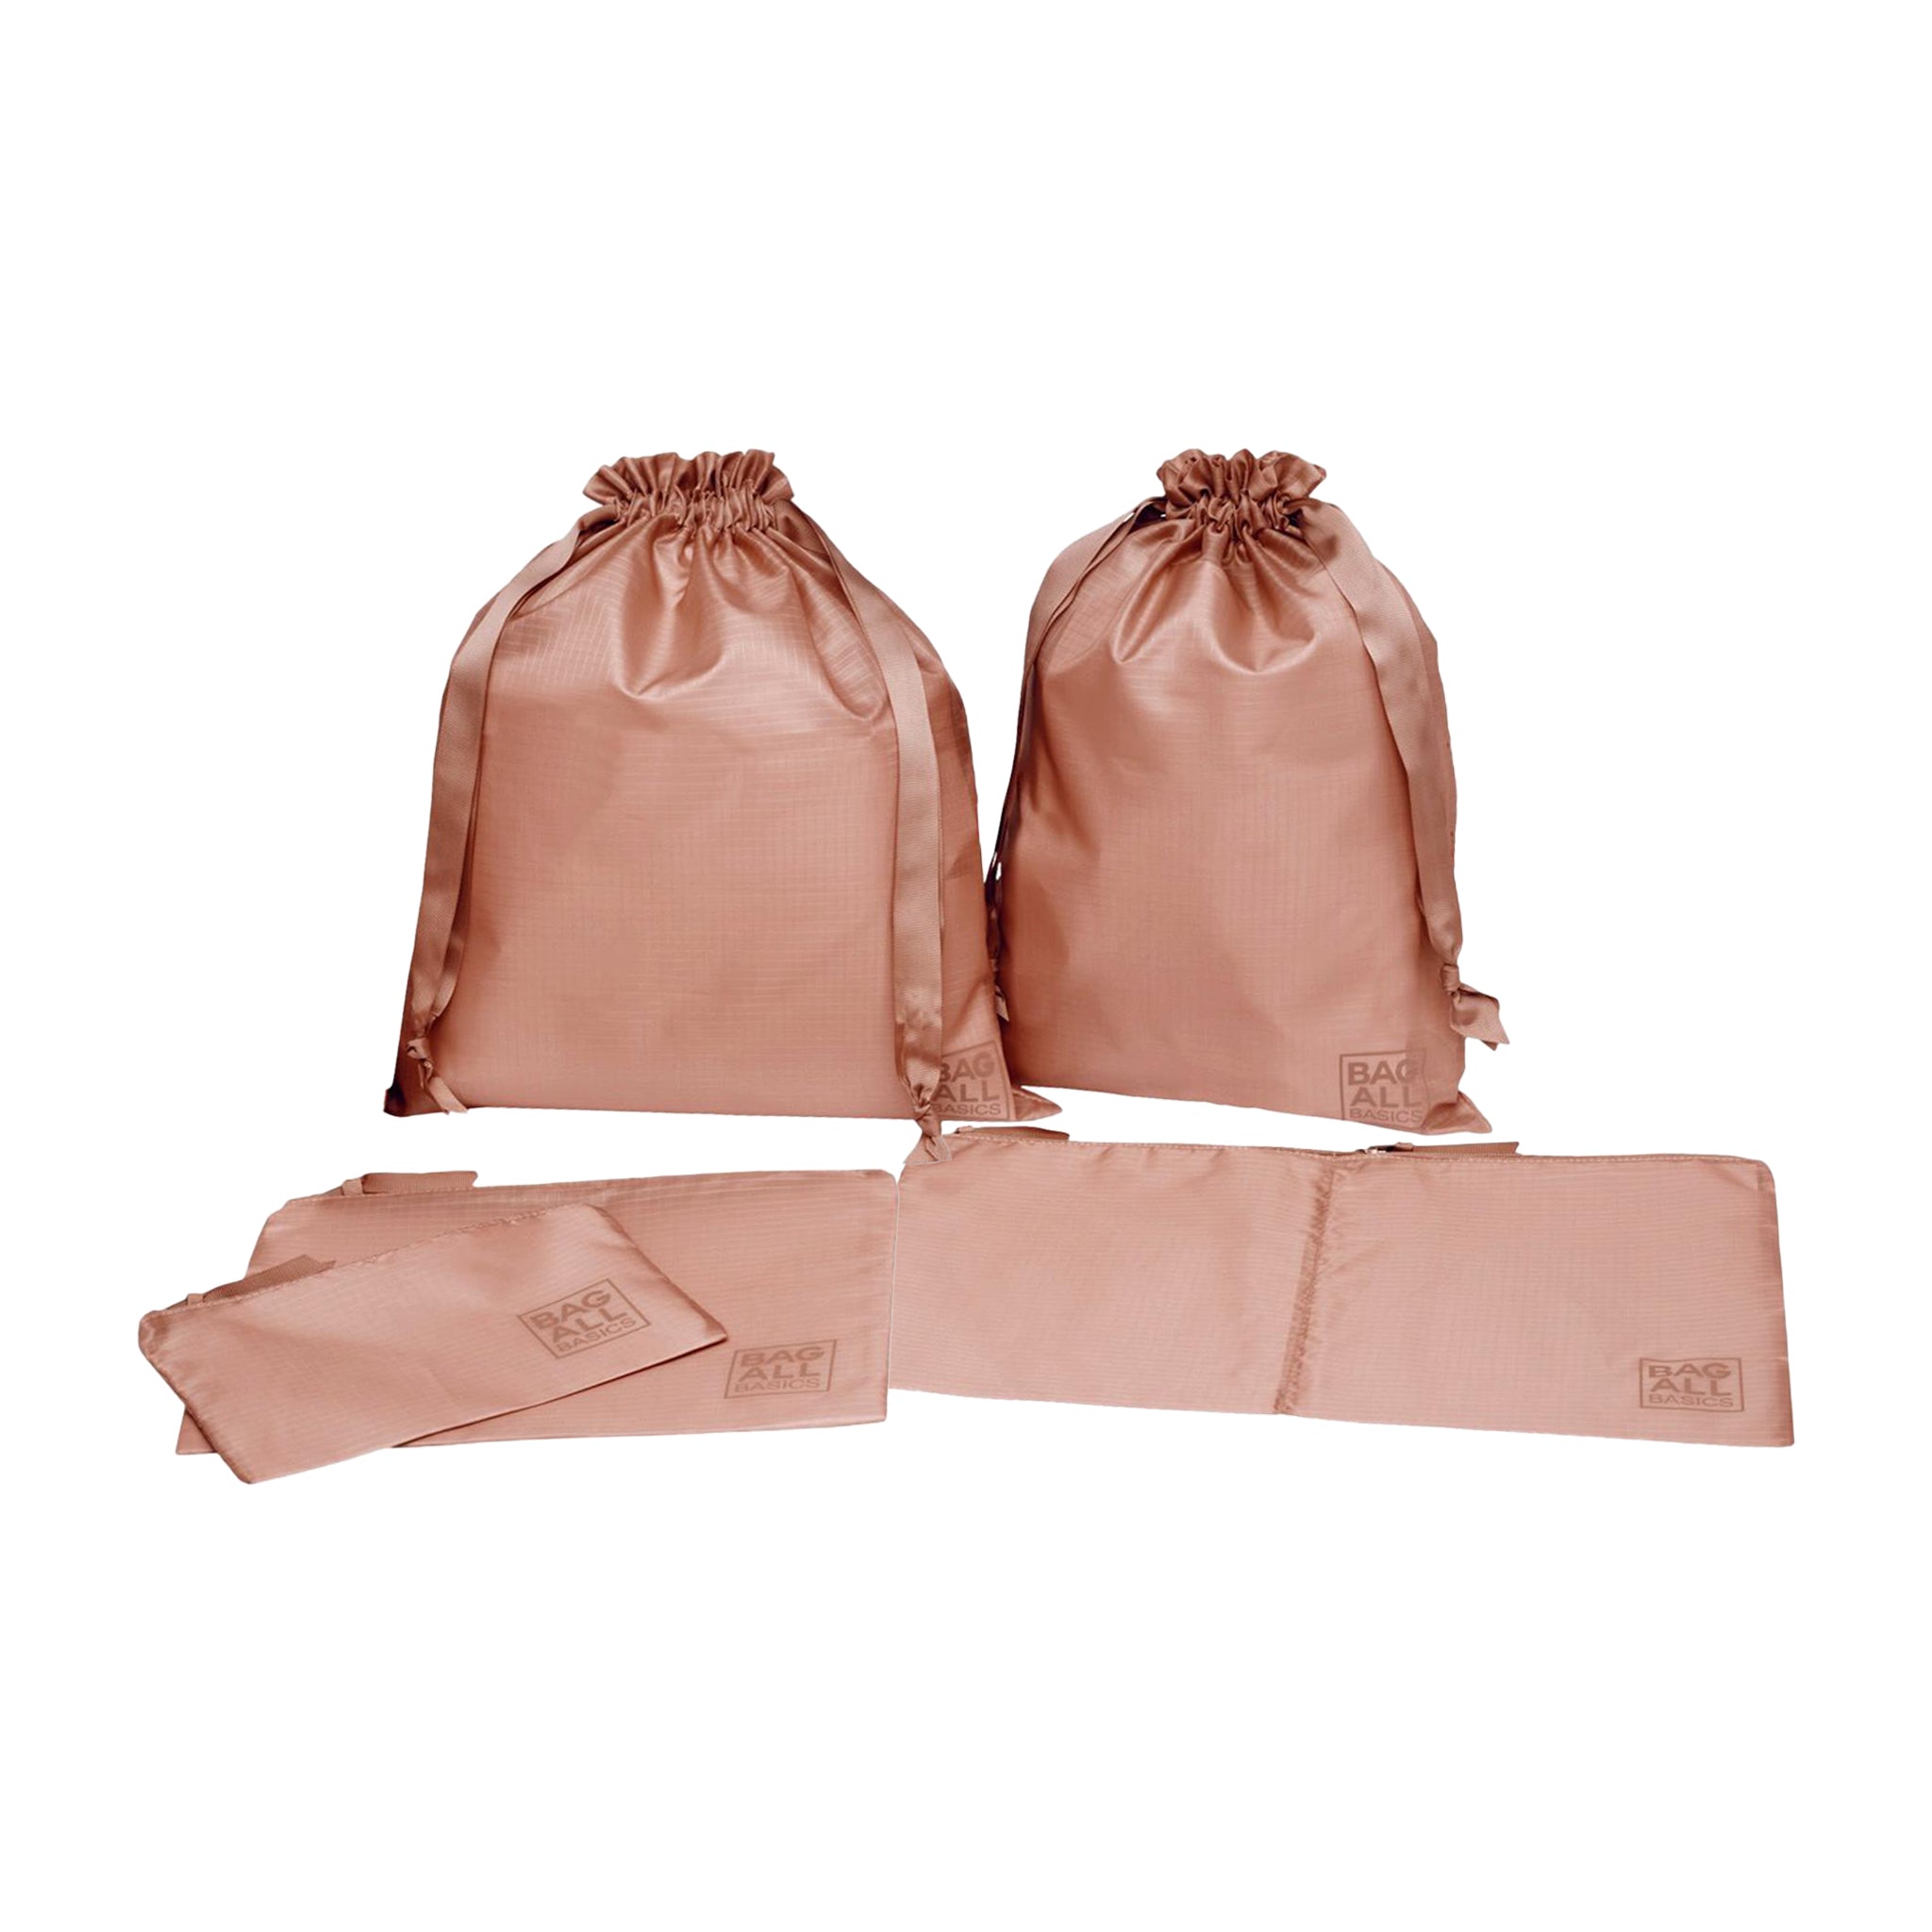 Bag-all Basic Sacs d’organisation, Rose Poudré, Pack de 5